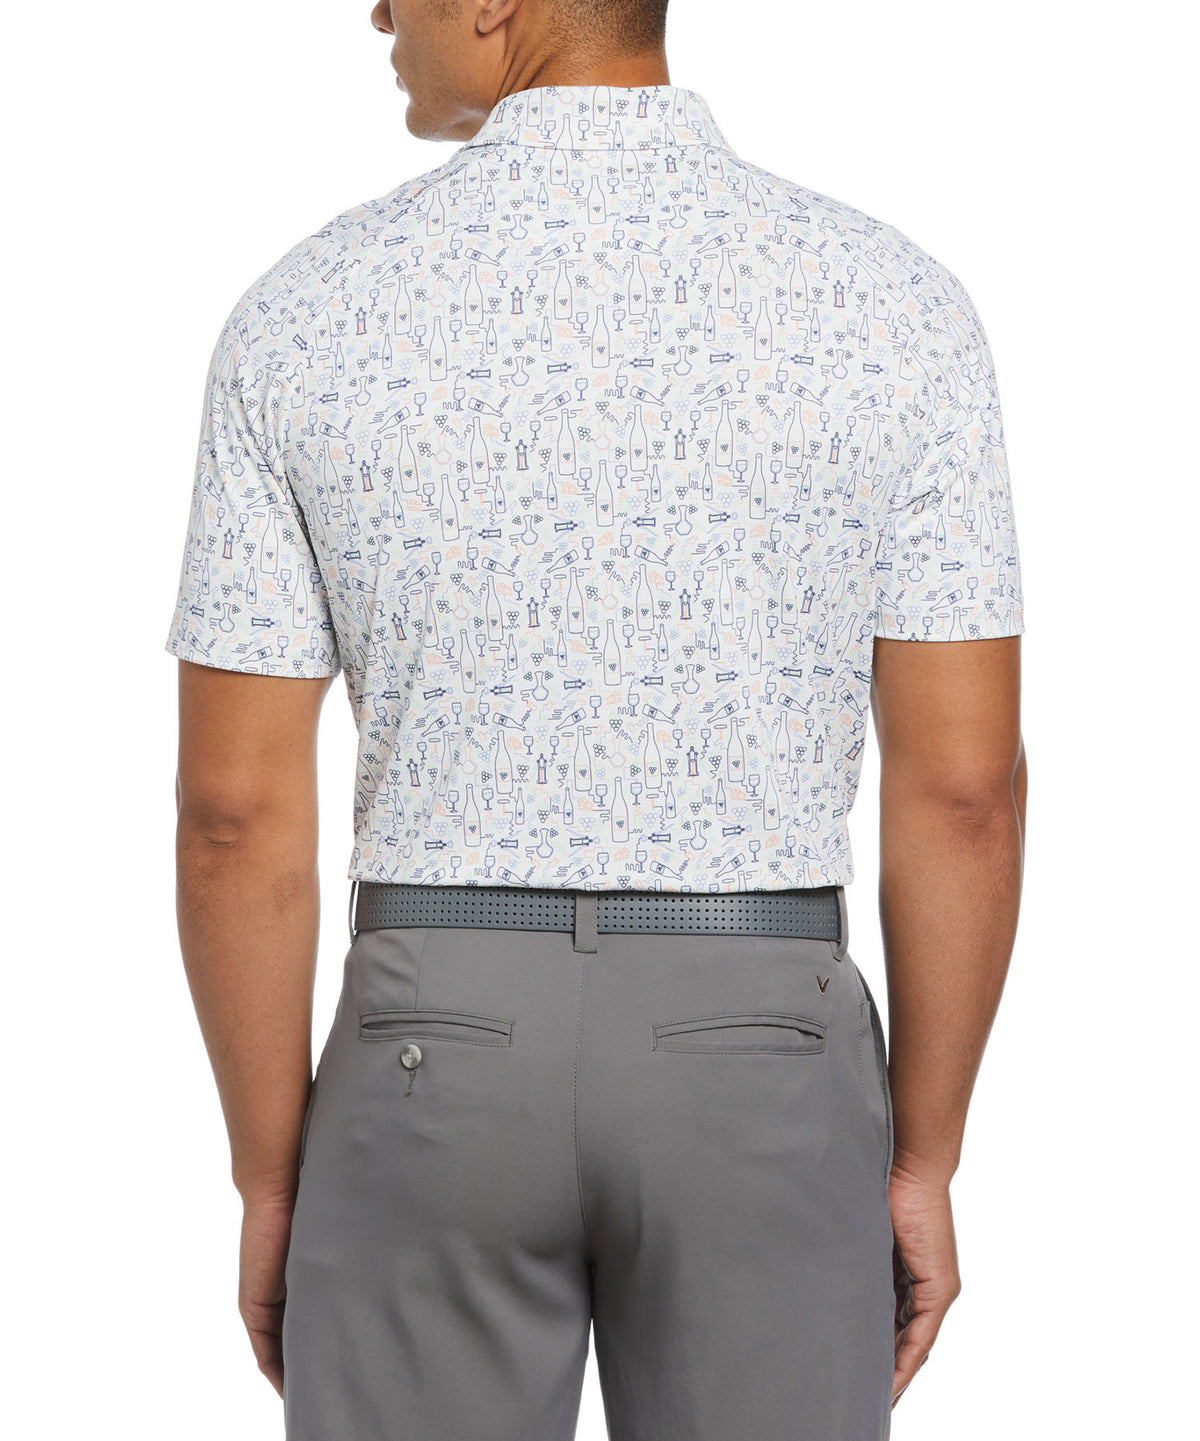 Callaway Short Sleeve Wine Print Polo Knit Shirt, Big & Tall